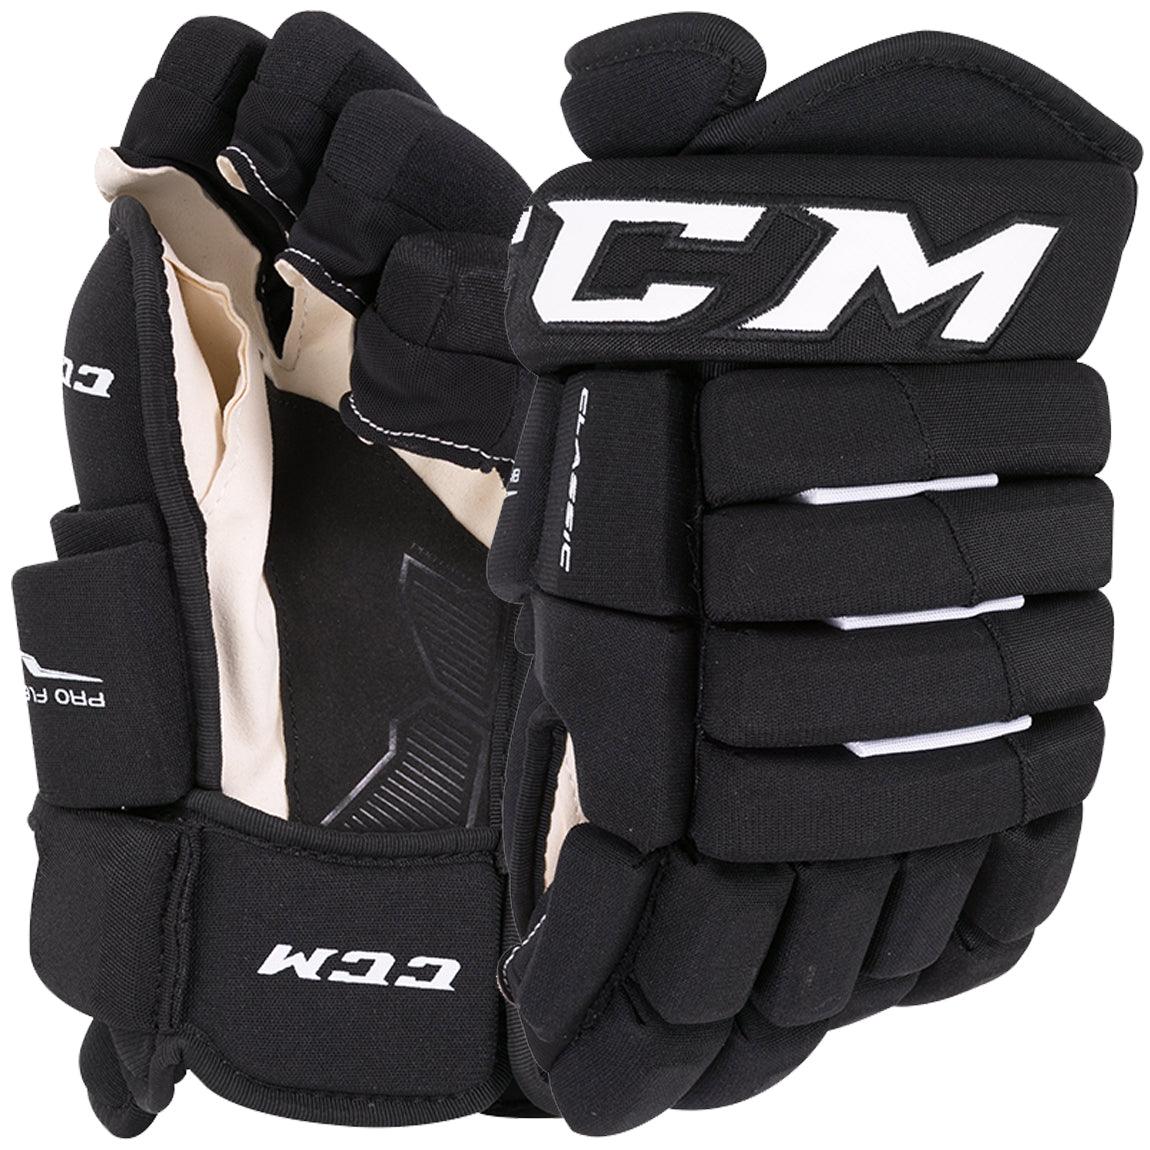 Senior Tacks Classic  Hockey Gloves by CCM